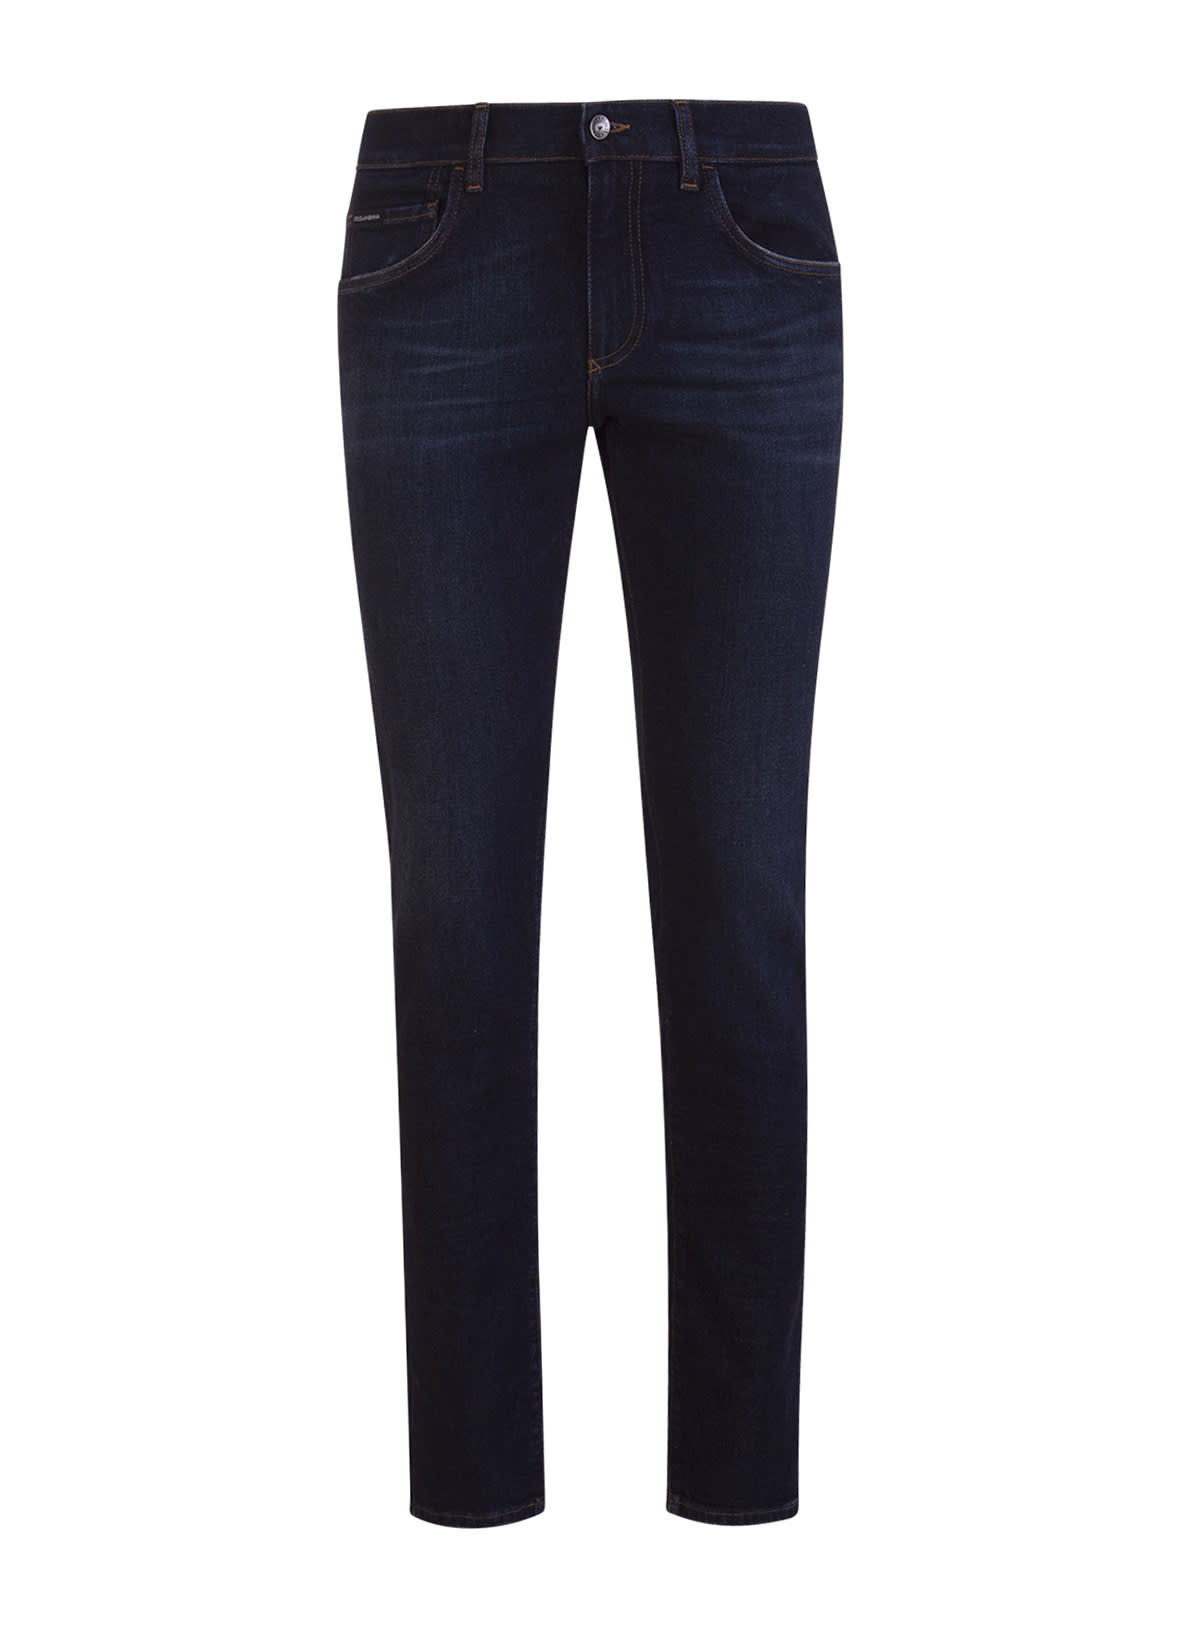 Dolce & Gabbana Low-rise Skinny Jeans